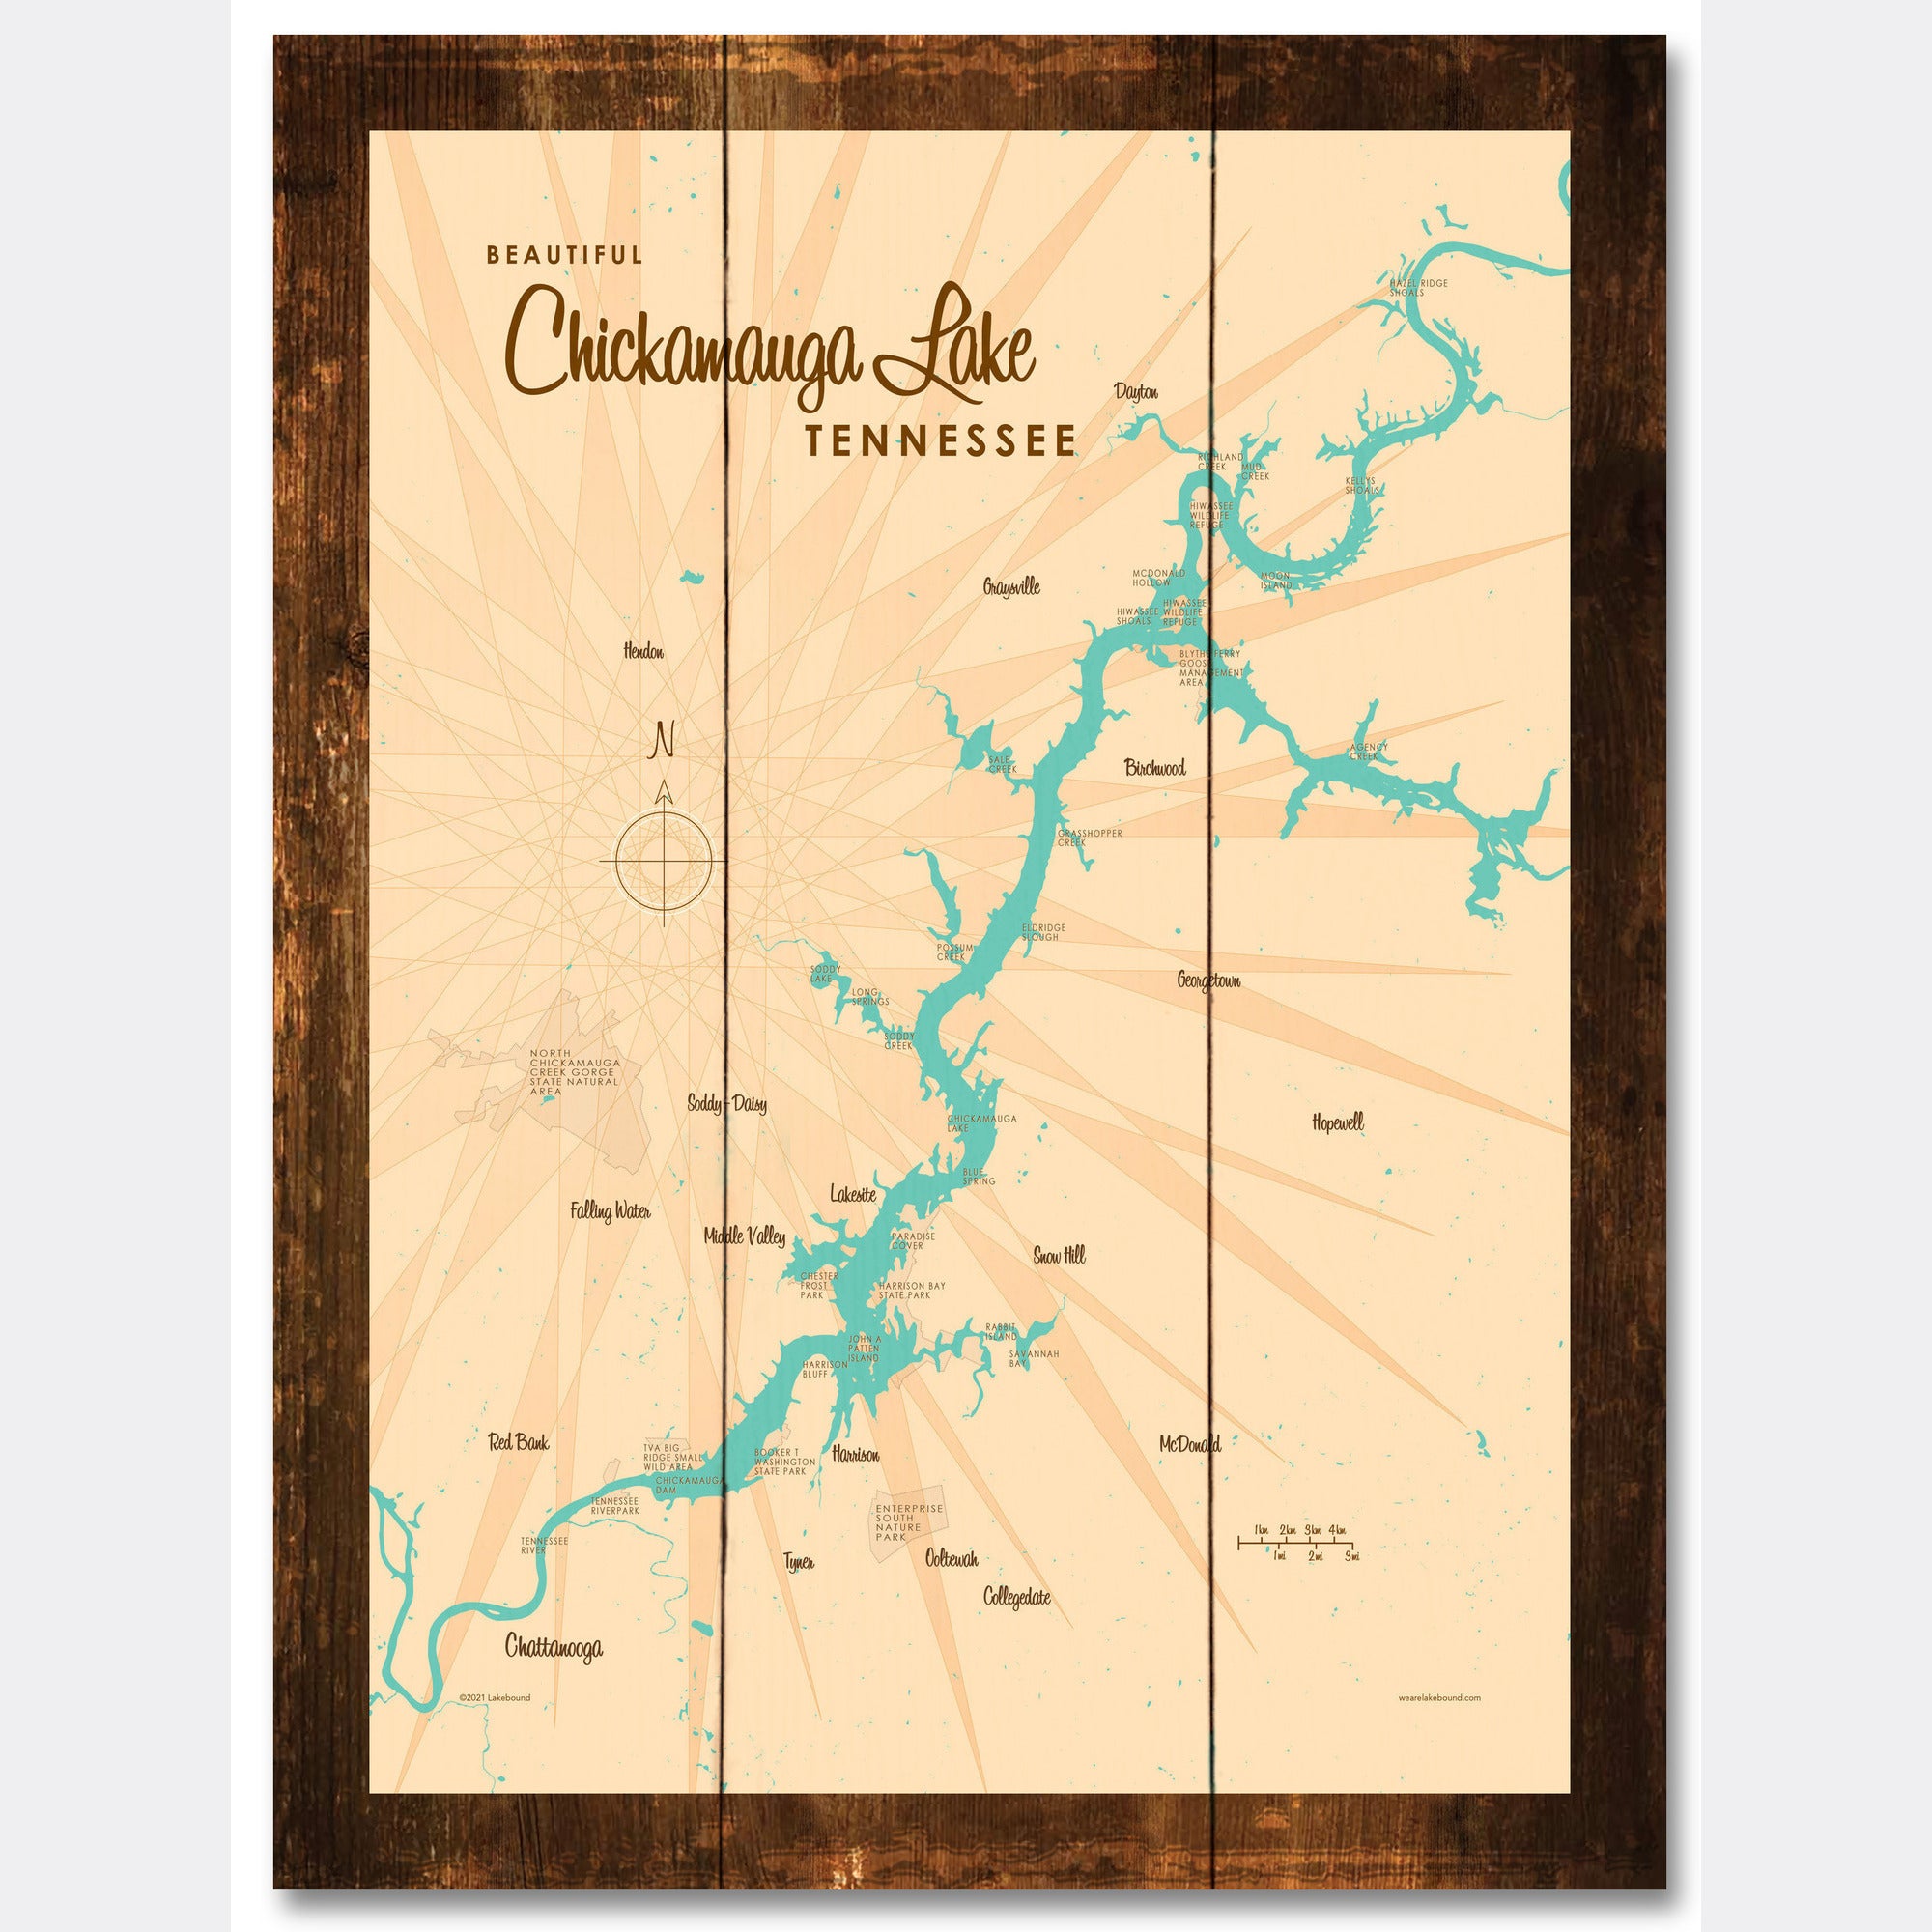 Chickamauga Lake Tennessee, Rustic Wood Sign Map Art